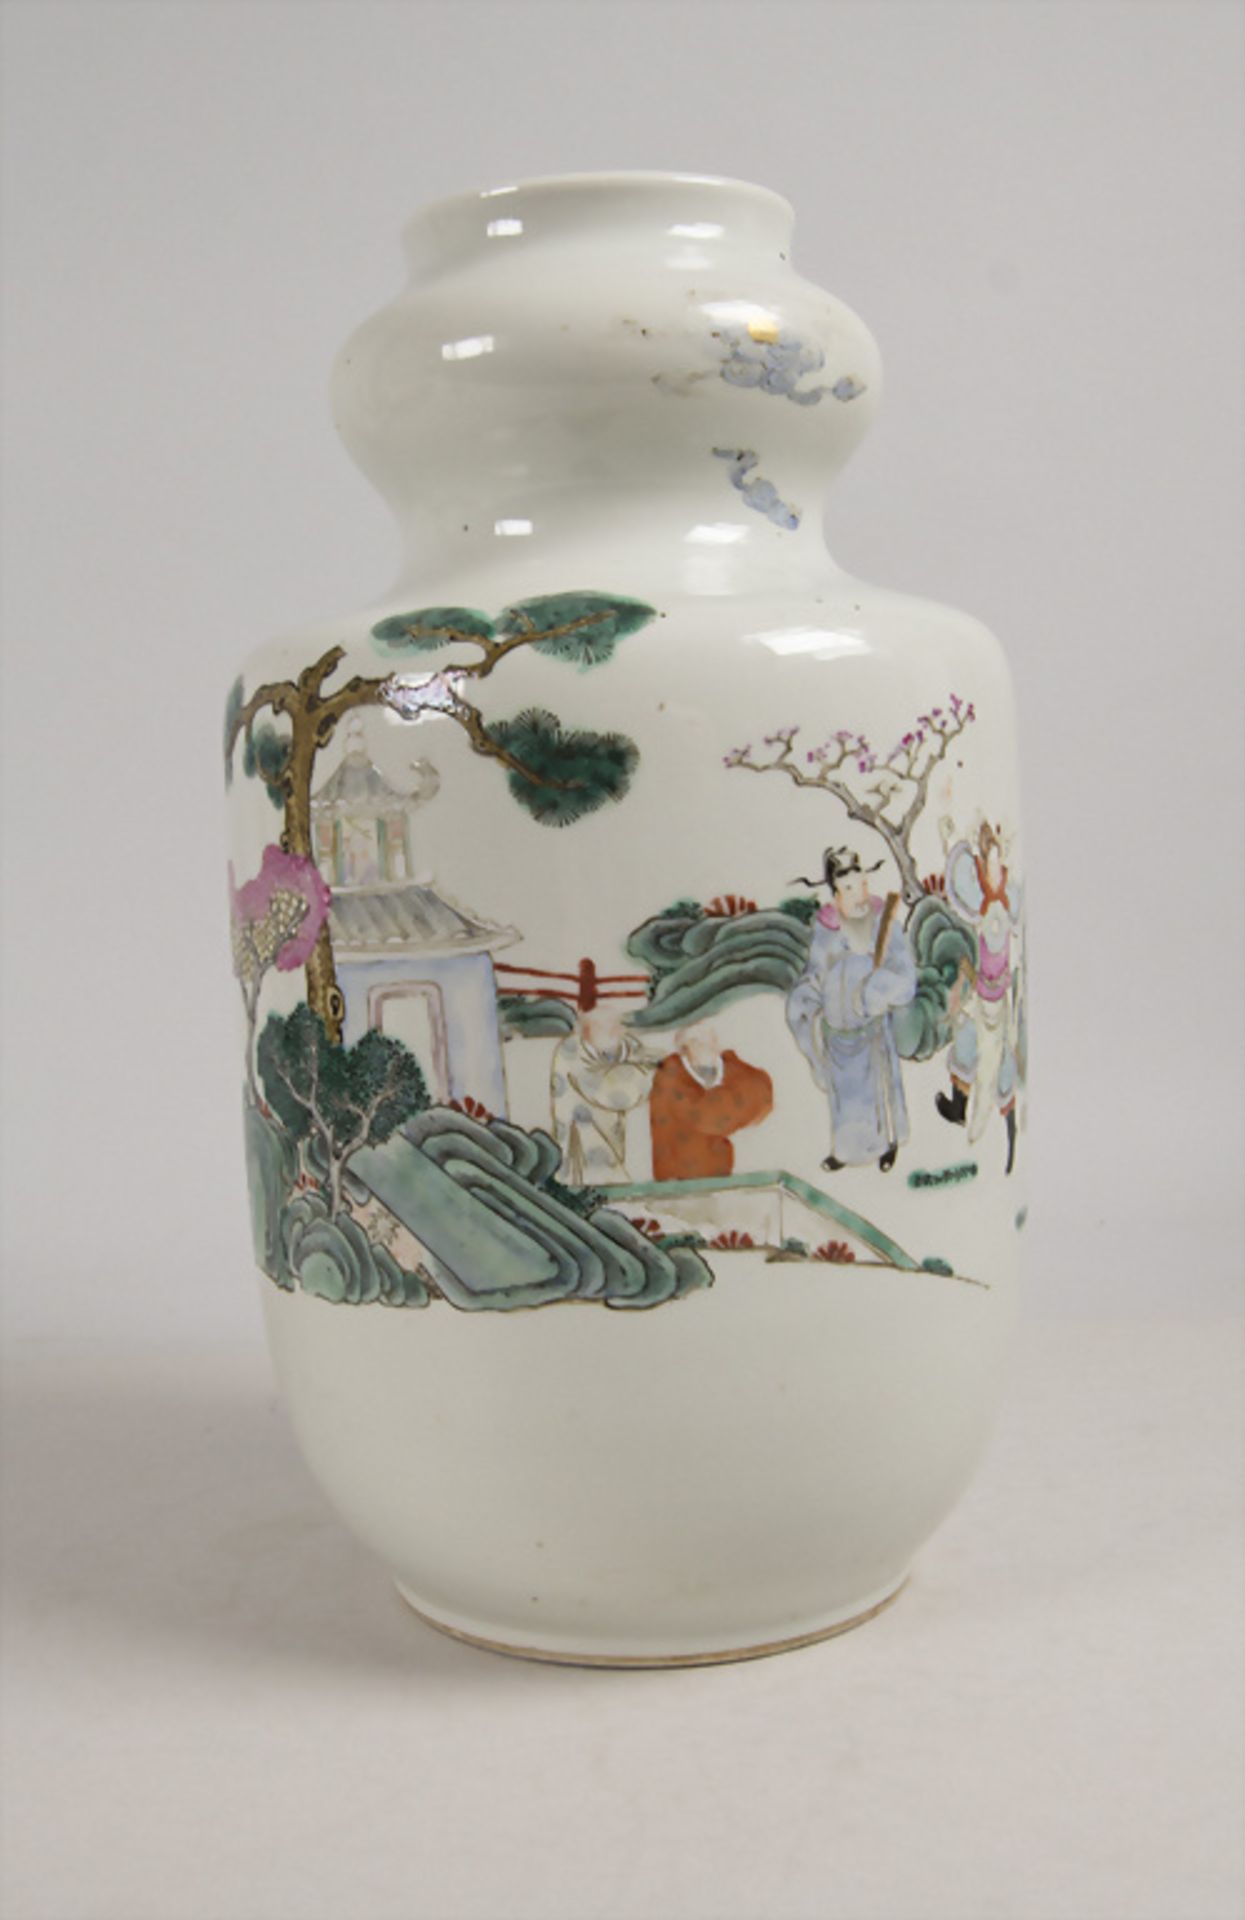 Ziervase / A decorative vase, China, Qing Dynastie (1644-1911), gemarkt Qianlong (1736-1795)